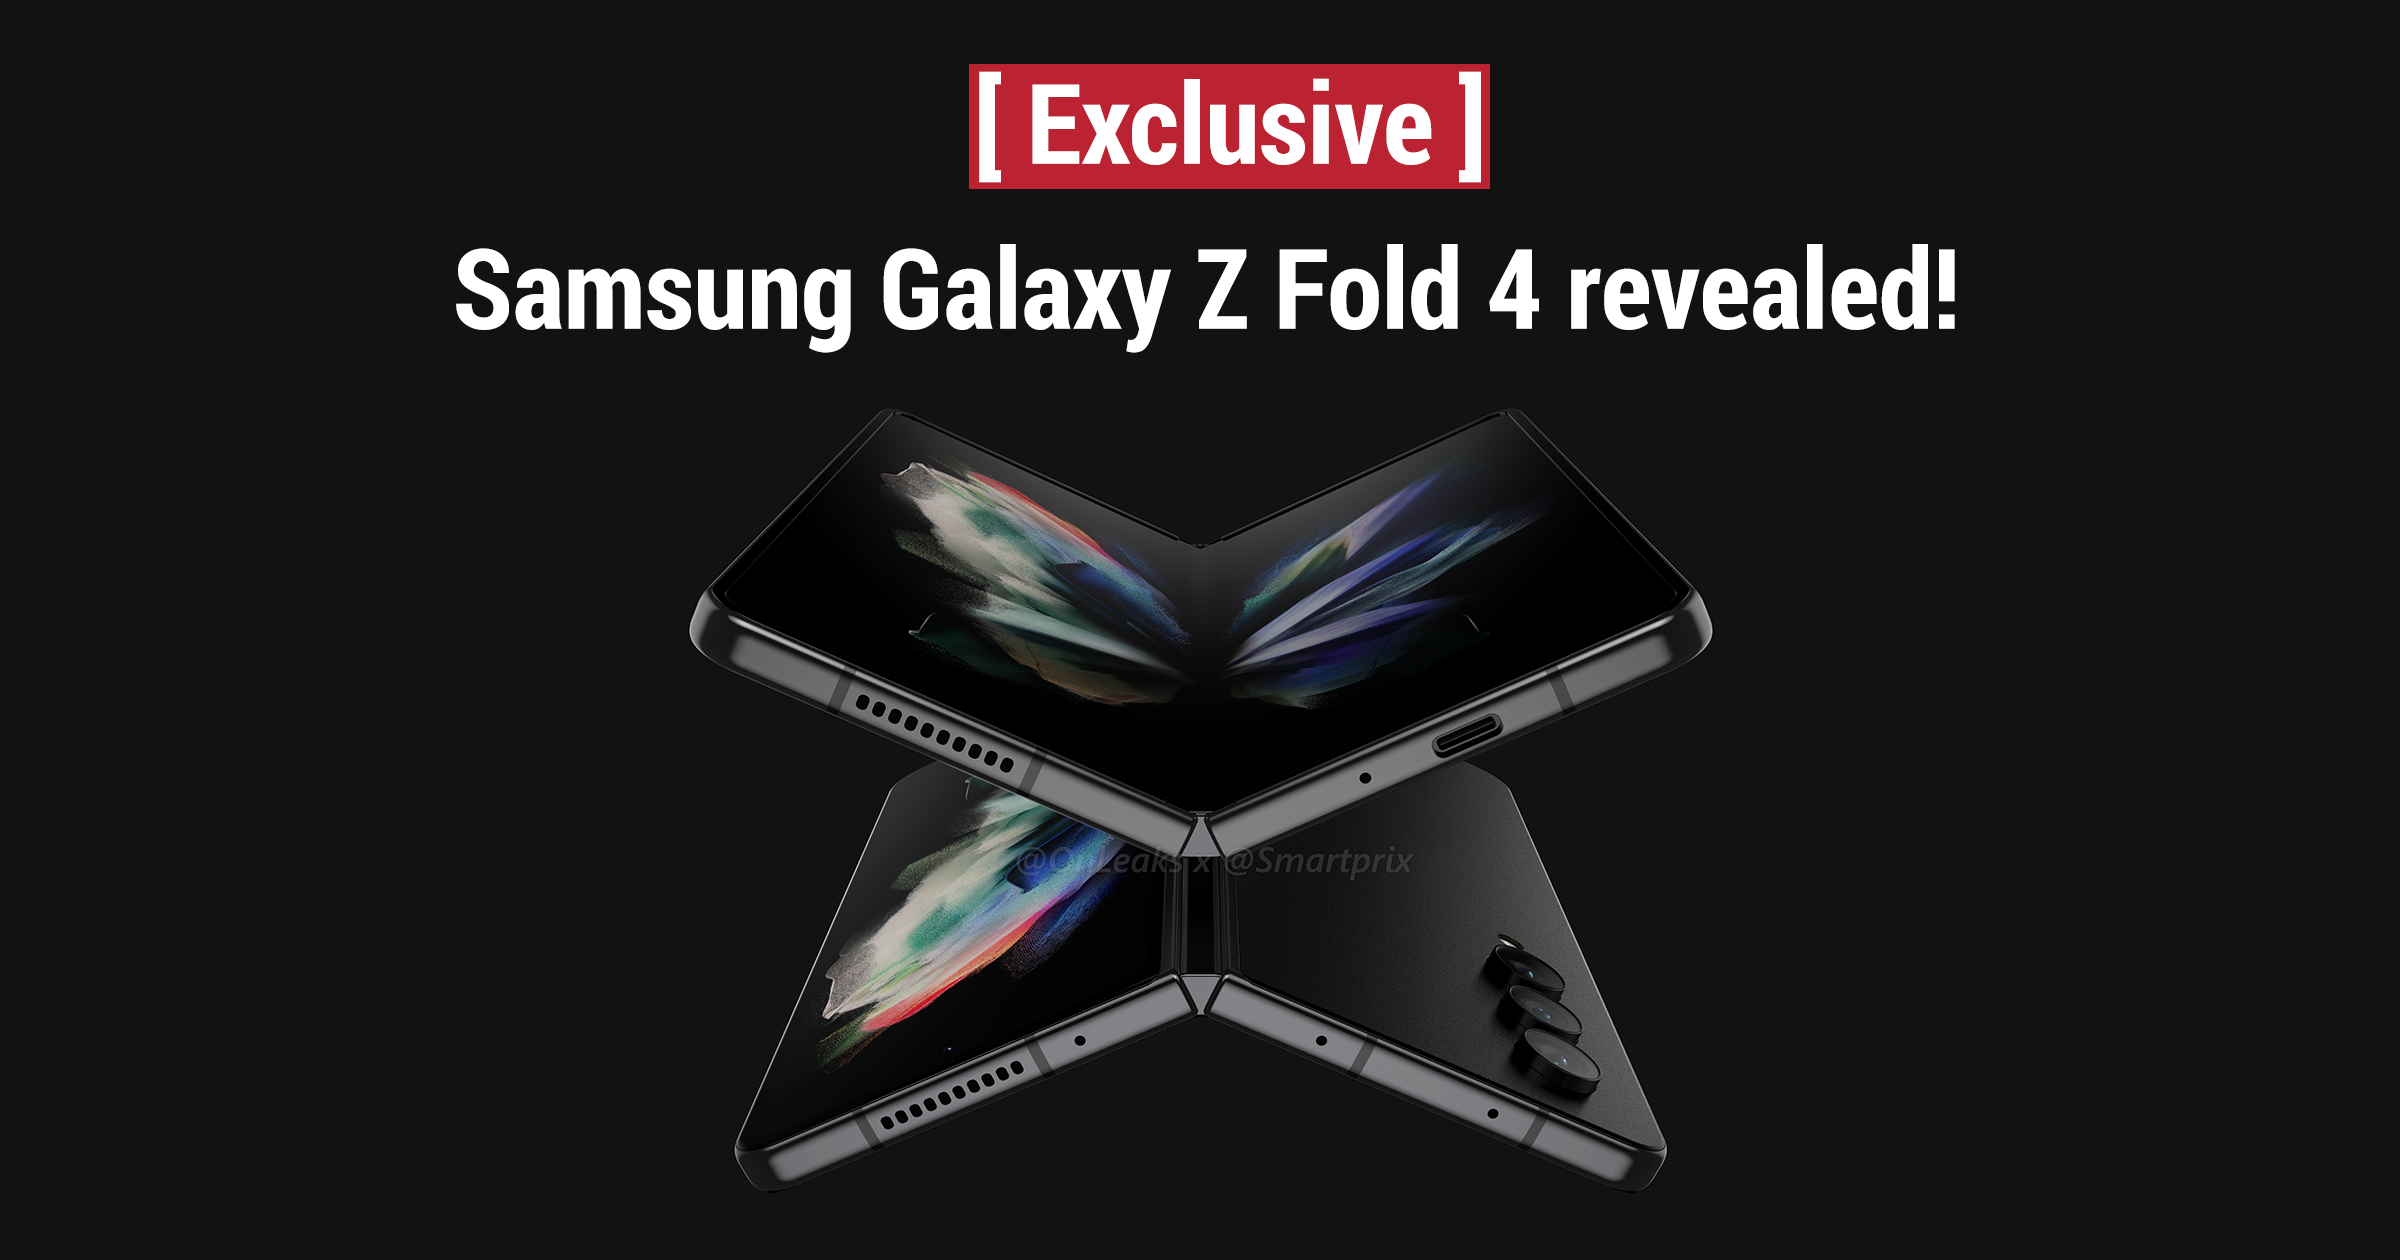 Samsung Galaxy Z Fold 4 Exclusive